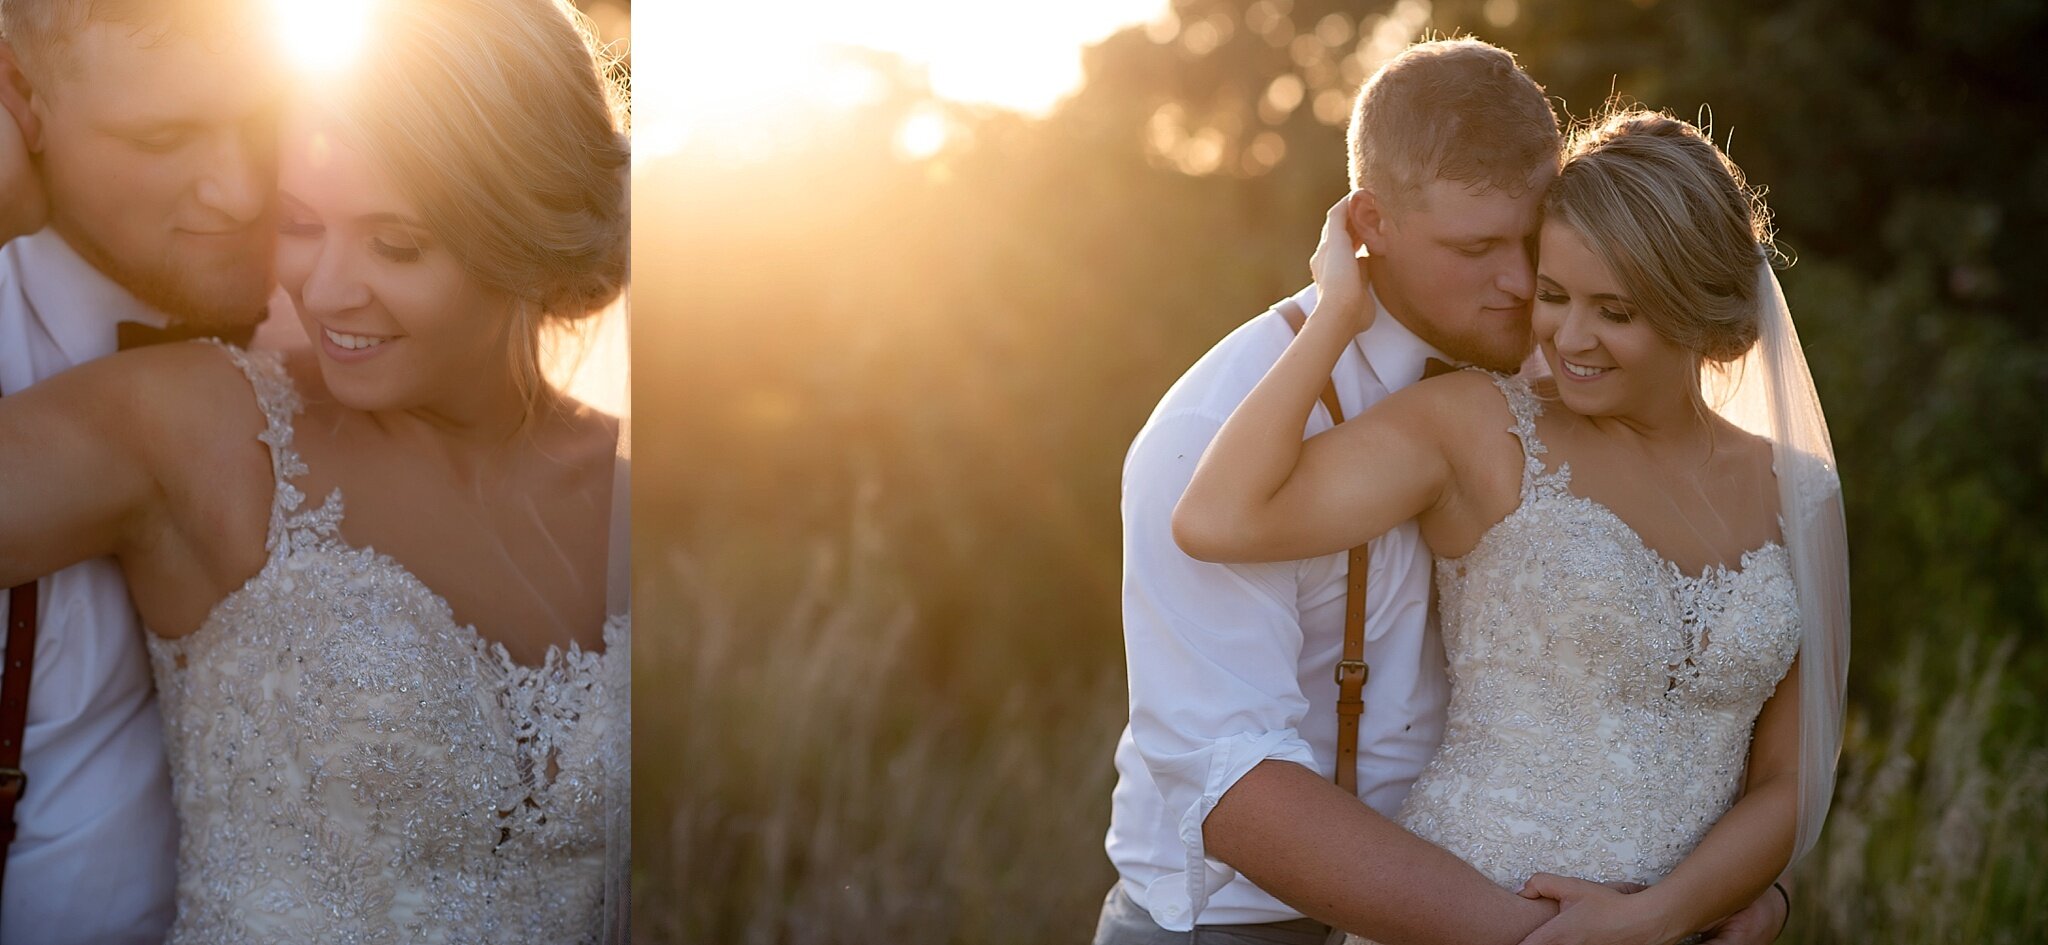 kate jones studios bride and groom sunset portrait wedding photographer